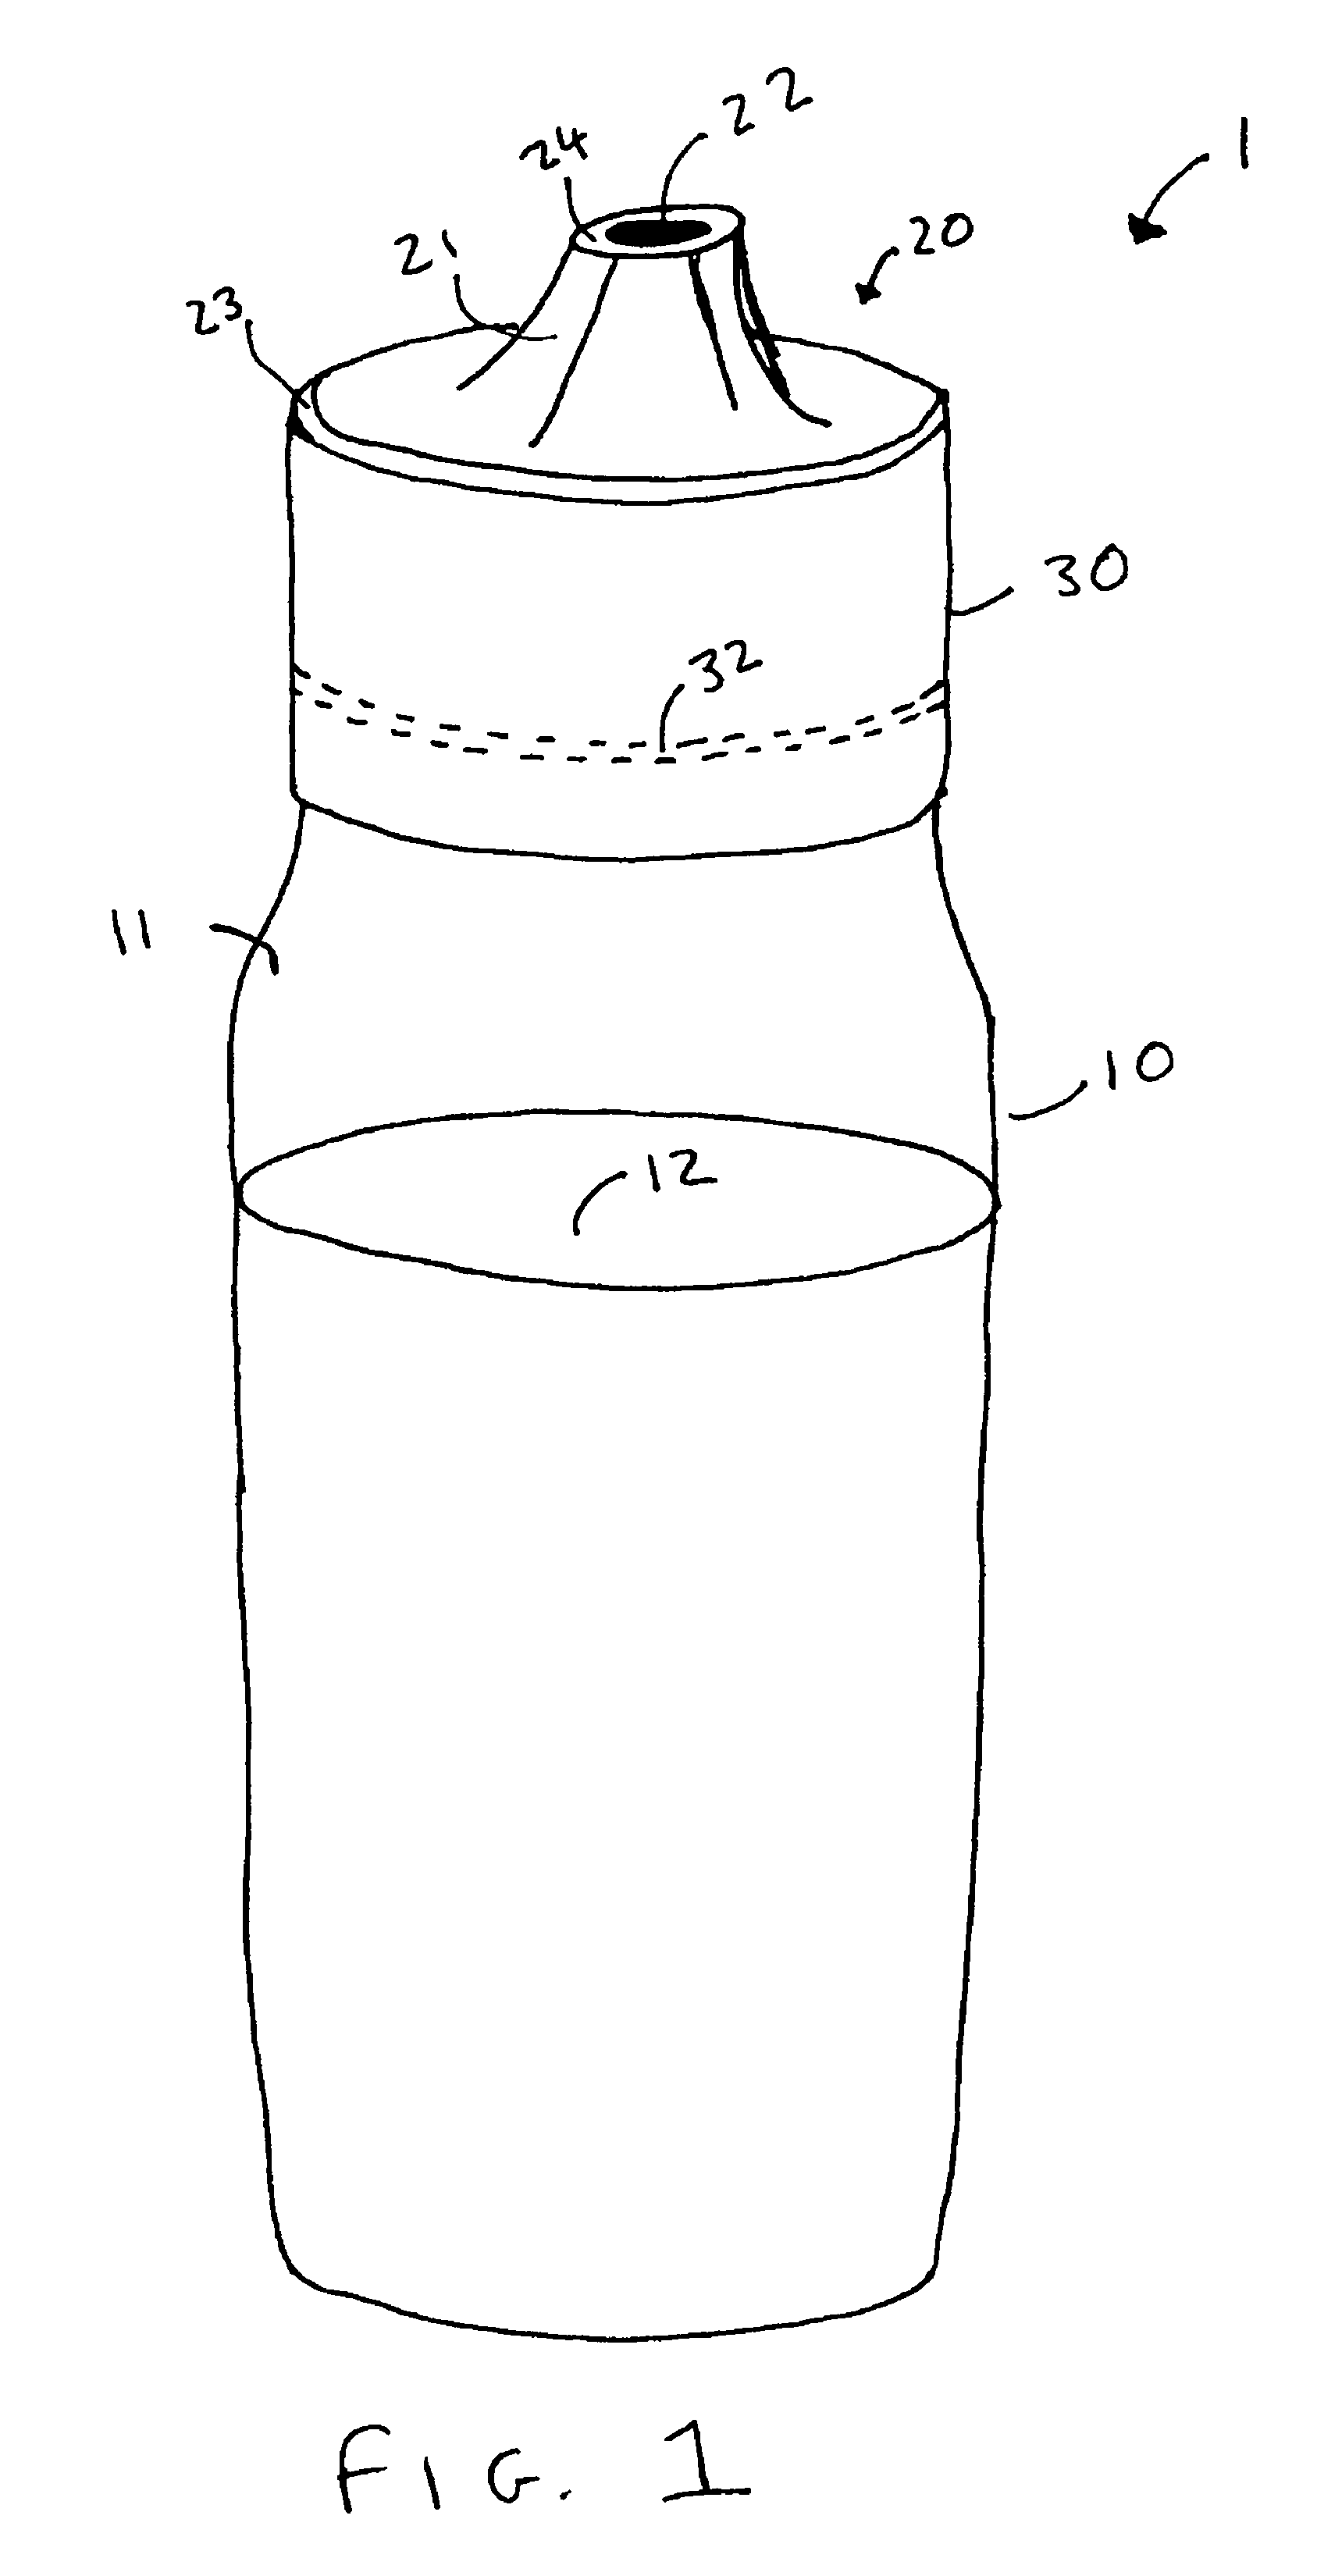 Beverage dispenser having an airtight valve and seal